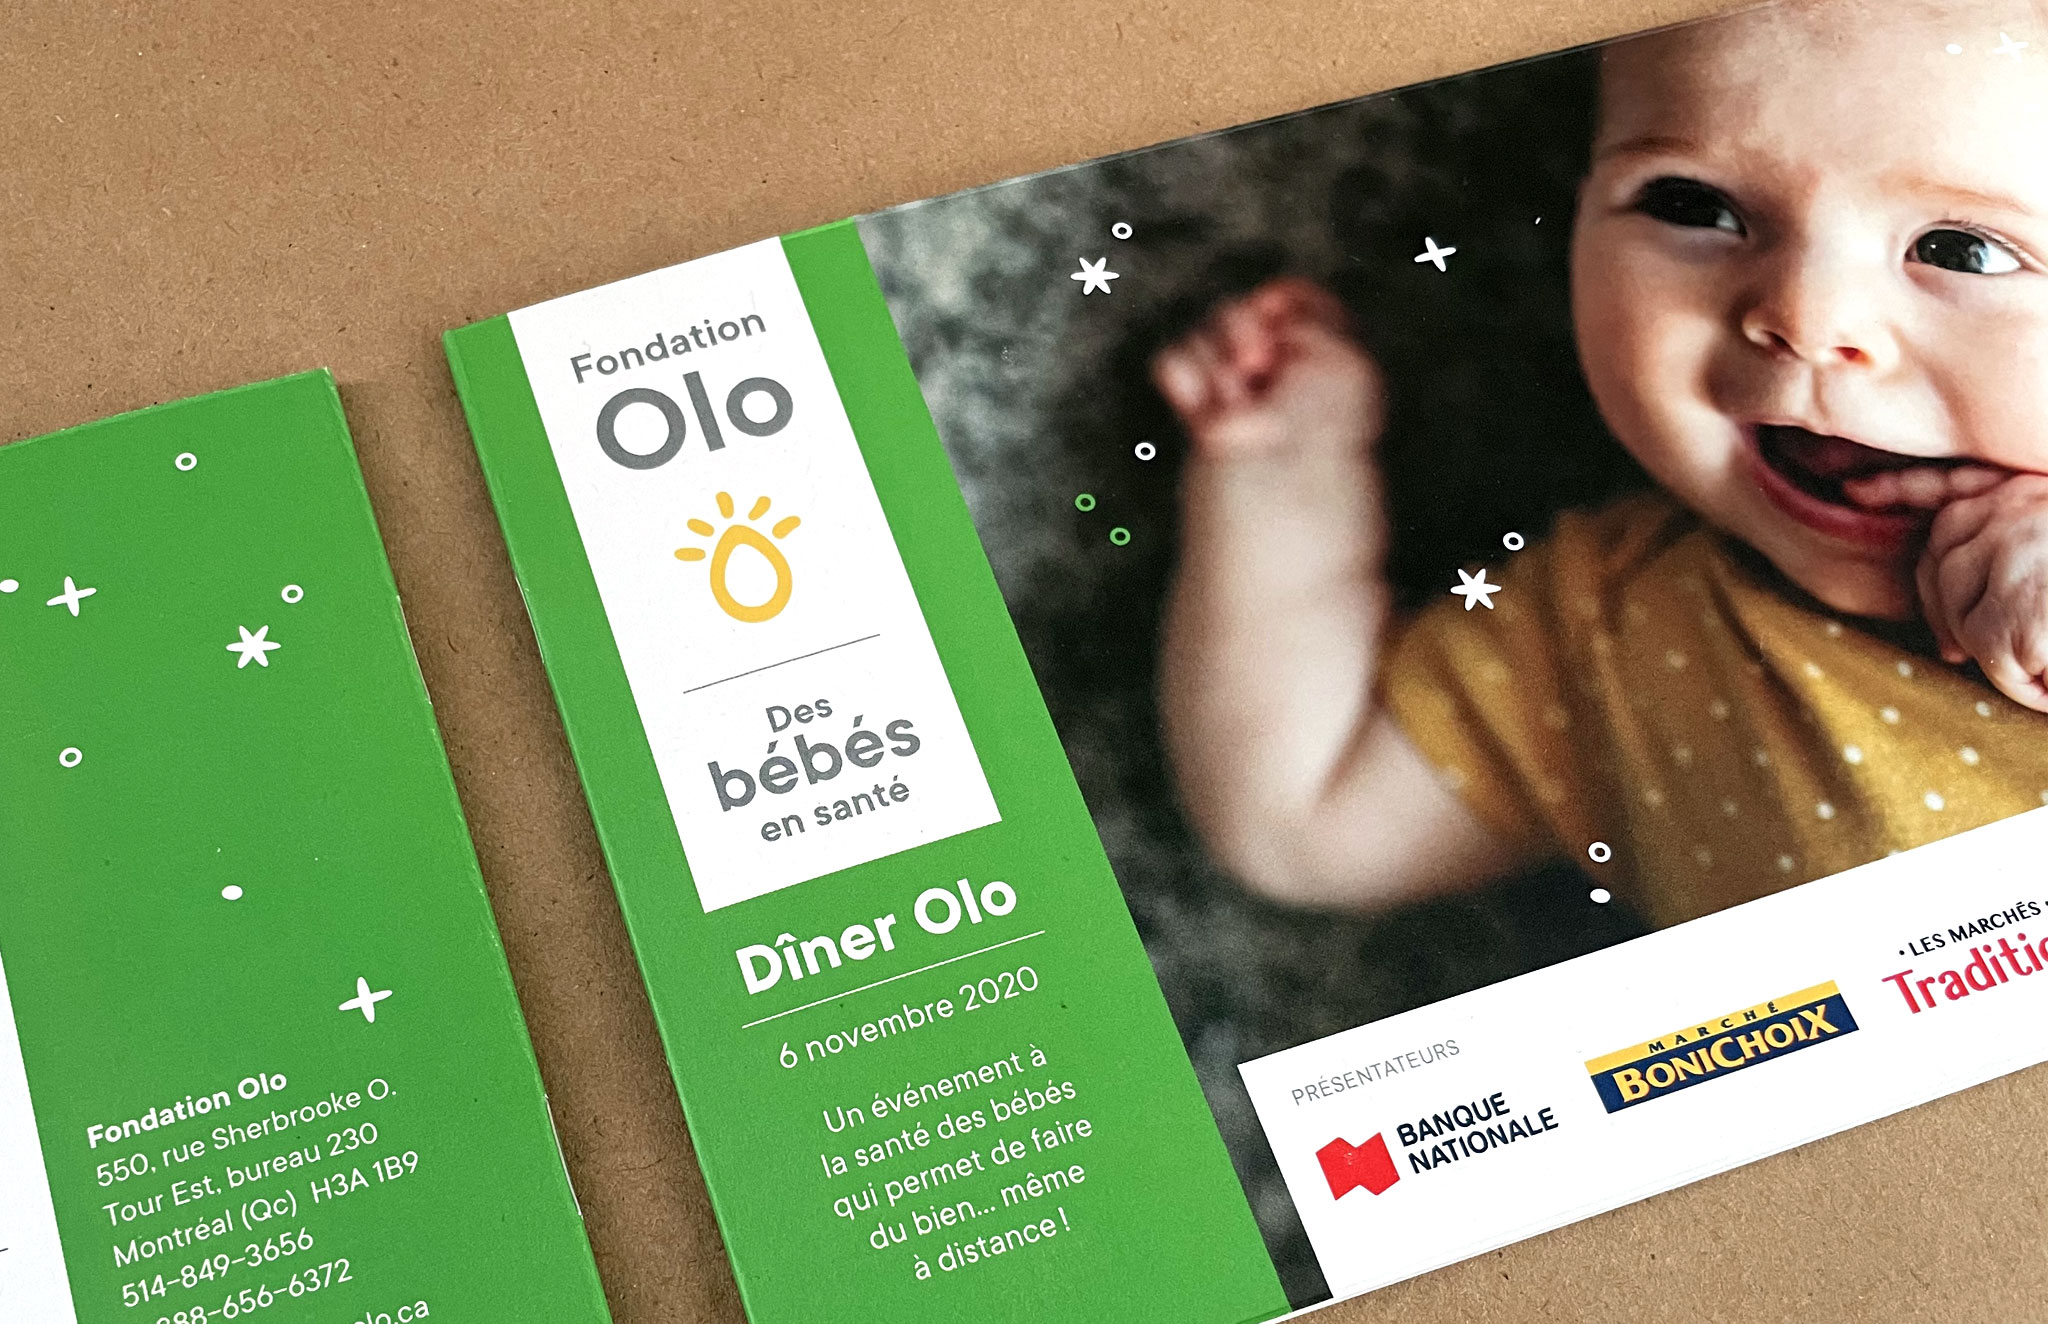 Programme souvenir Dîner Olo de la Fondation Olo.